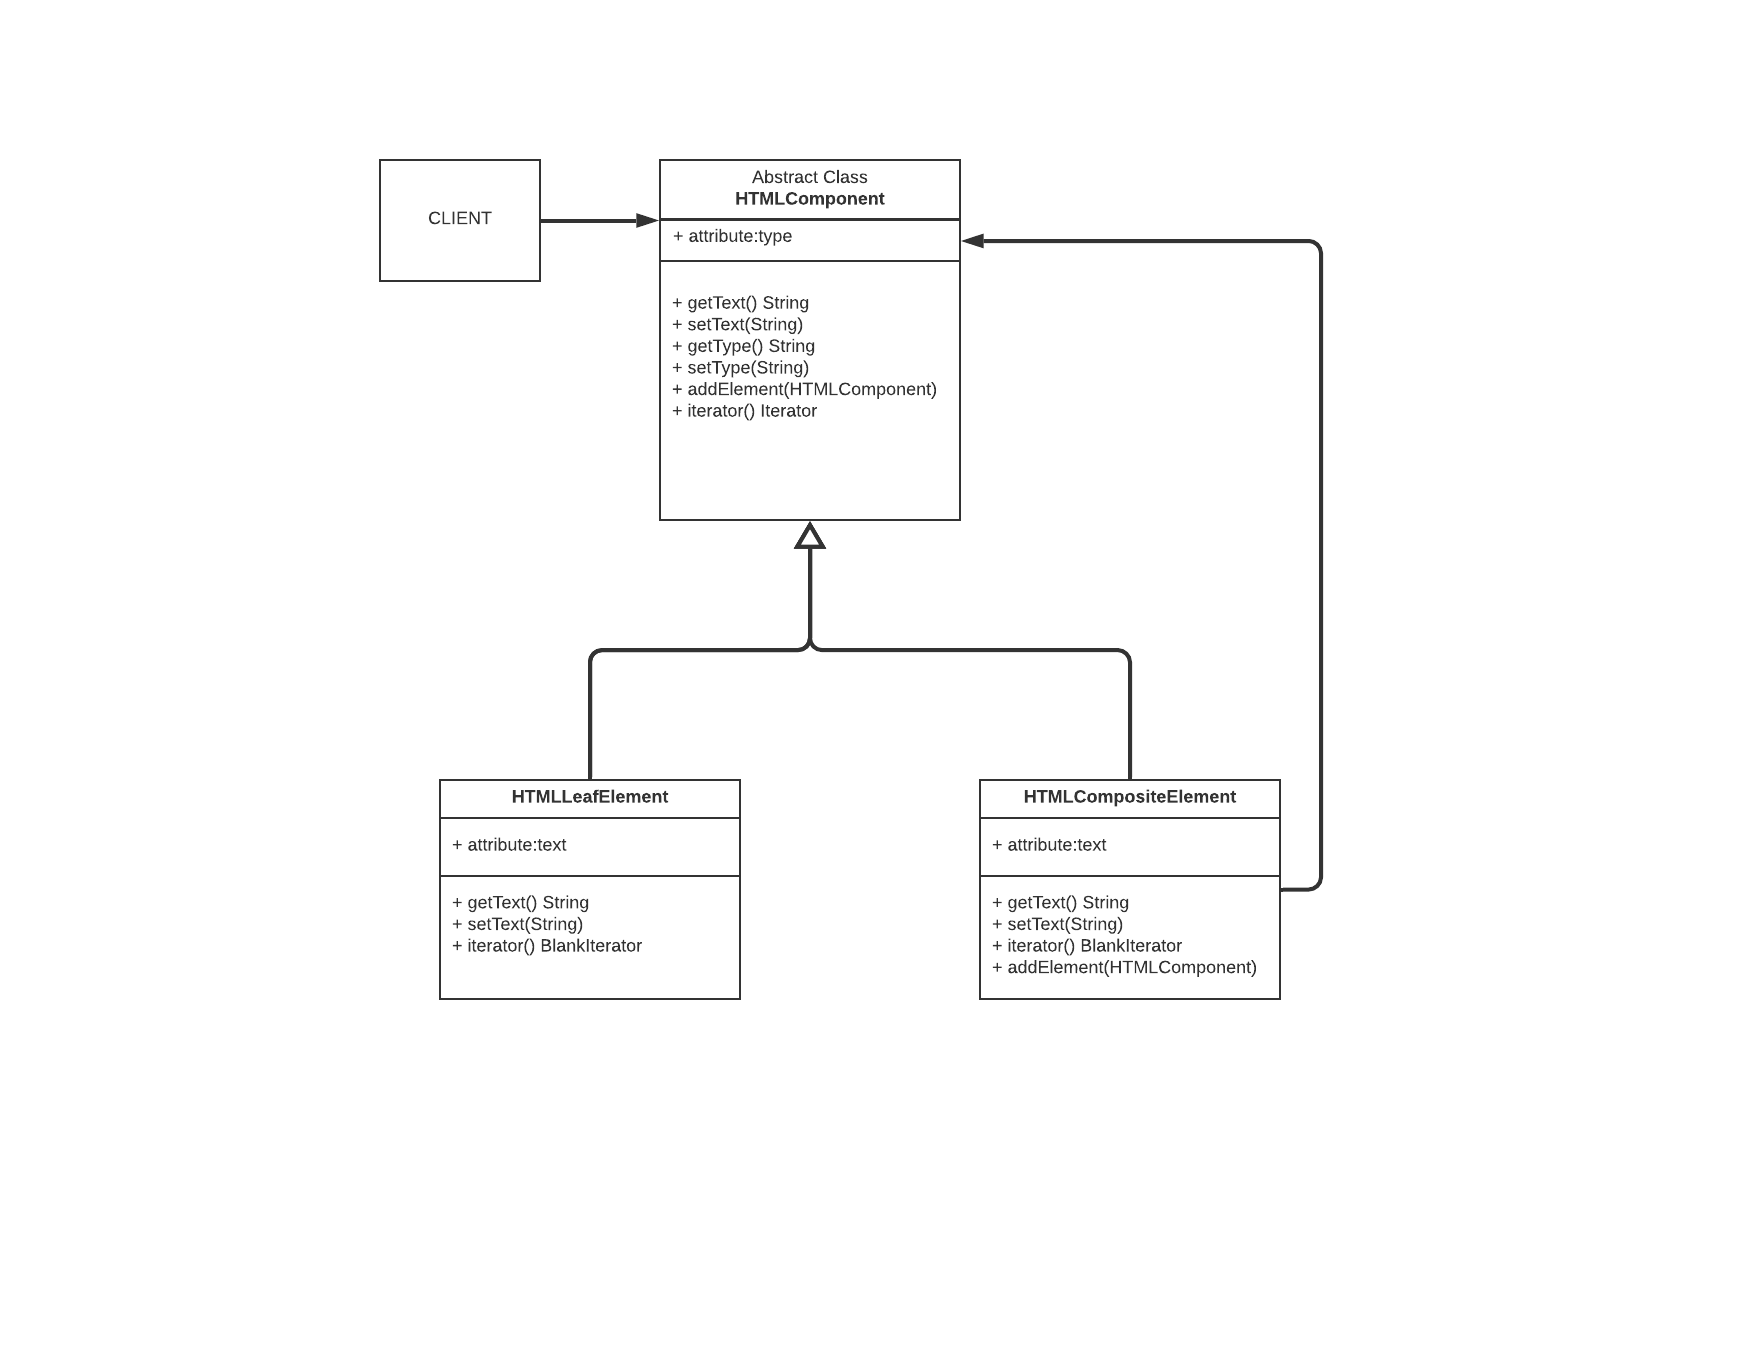 UML Class Diagram for Composite Pattern